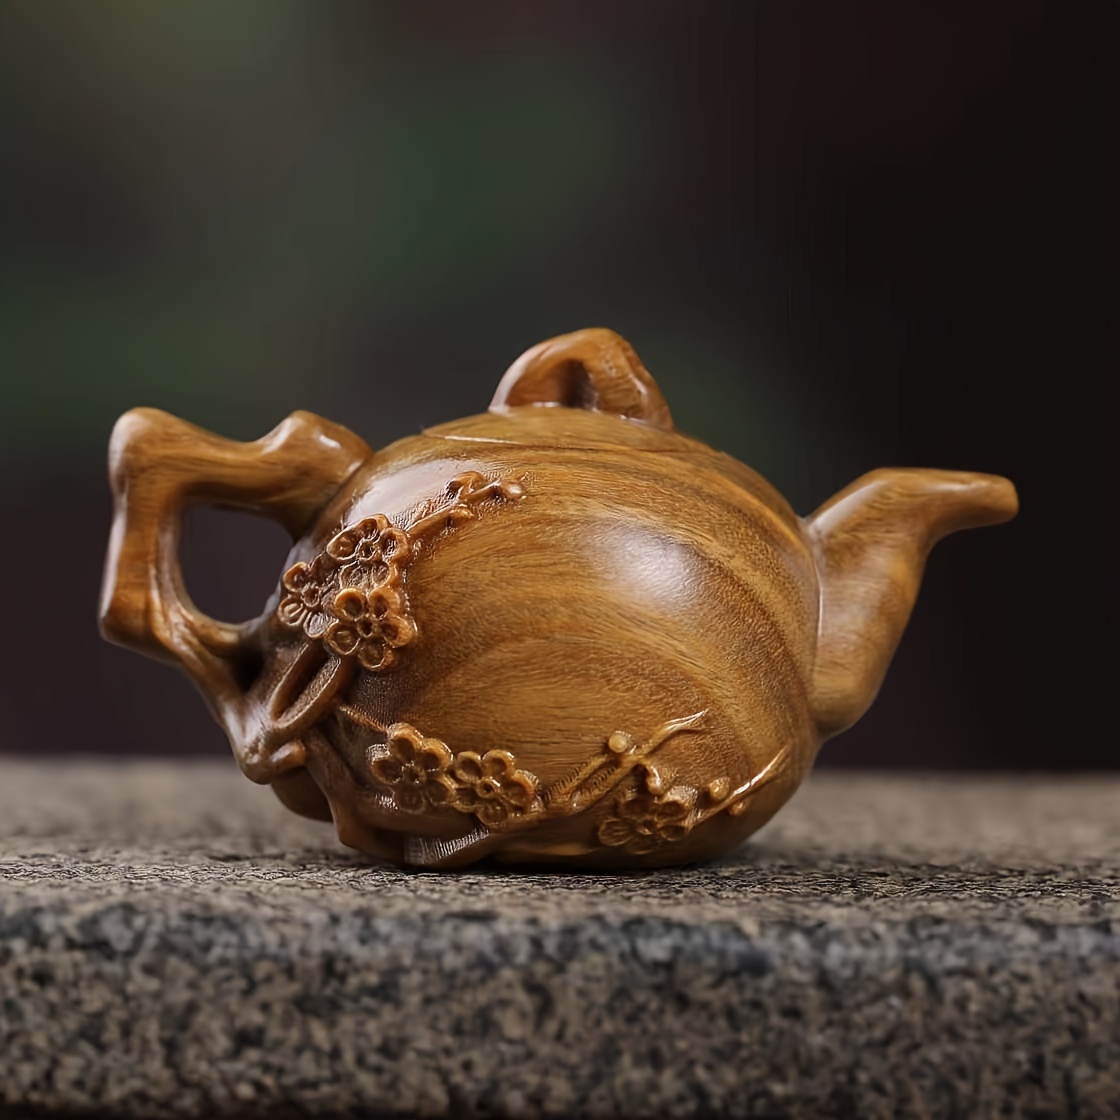 

1pc Green Sandalwood Carved Teapot, Plum Wooden Teapot, Home Office Desktop Decoration, Handicraft Art Ornaments, Wooden Collection